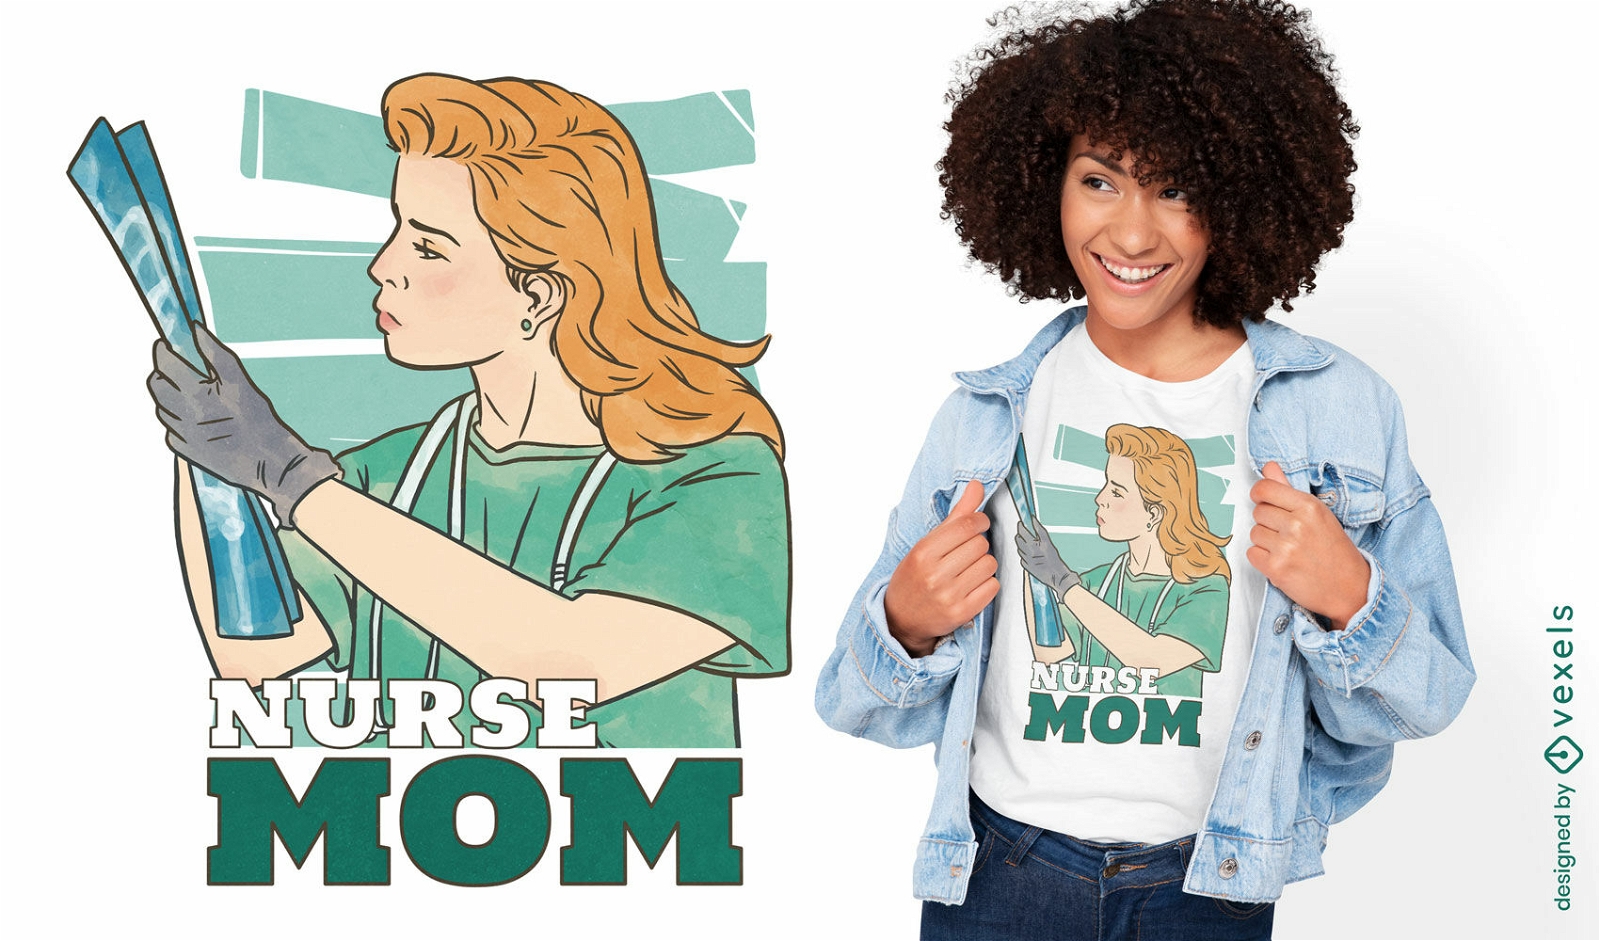 Nurse mom character t-shirt design